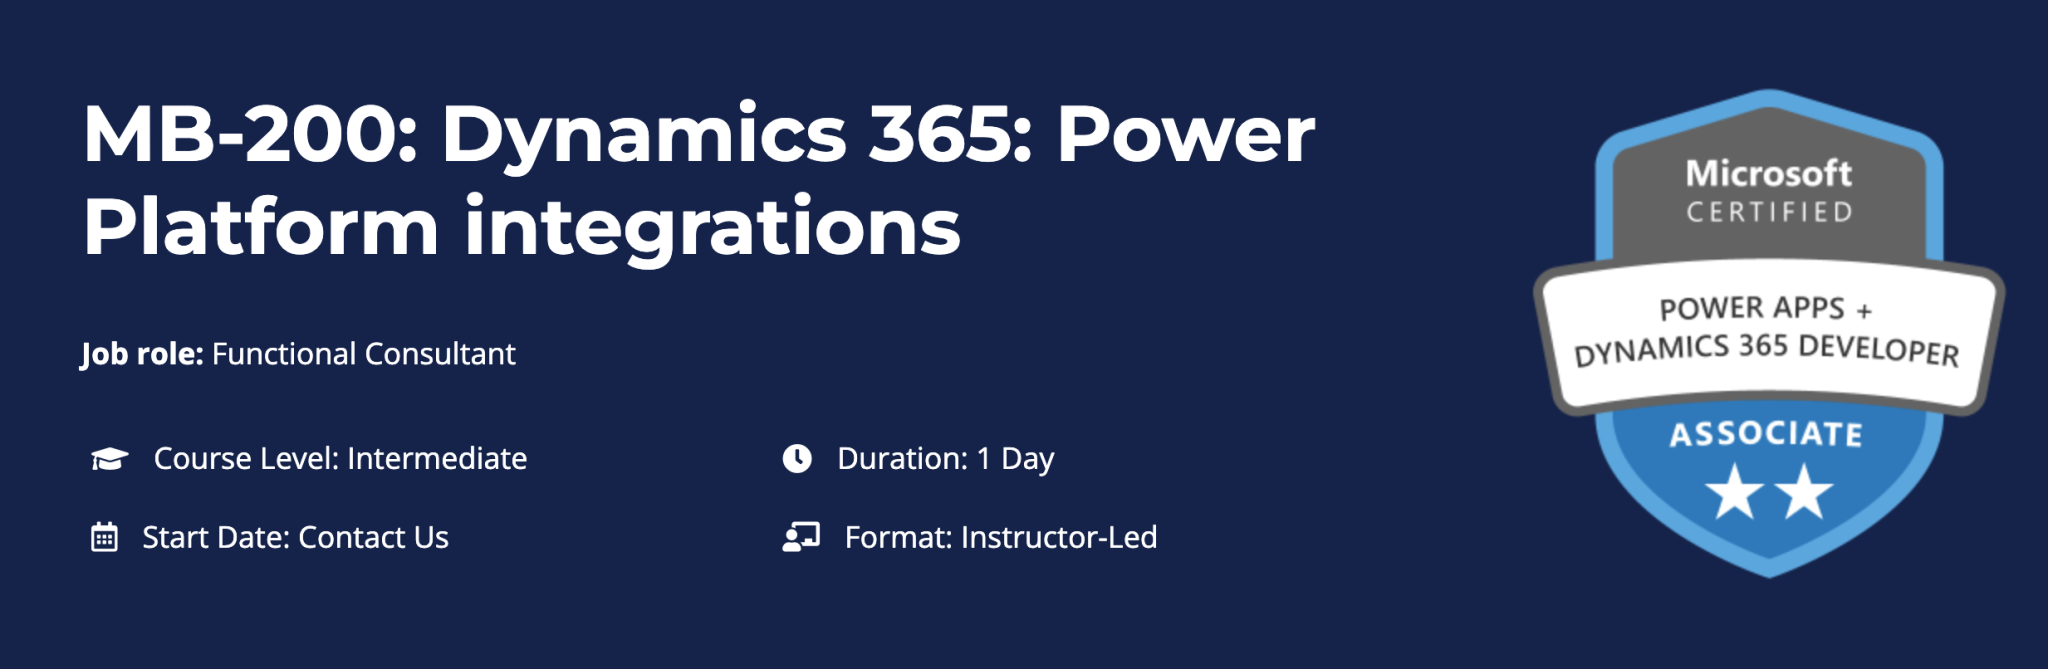 MB-200: Dynamics 365: Power Platform integrations